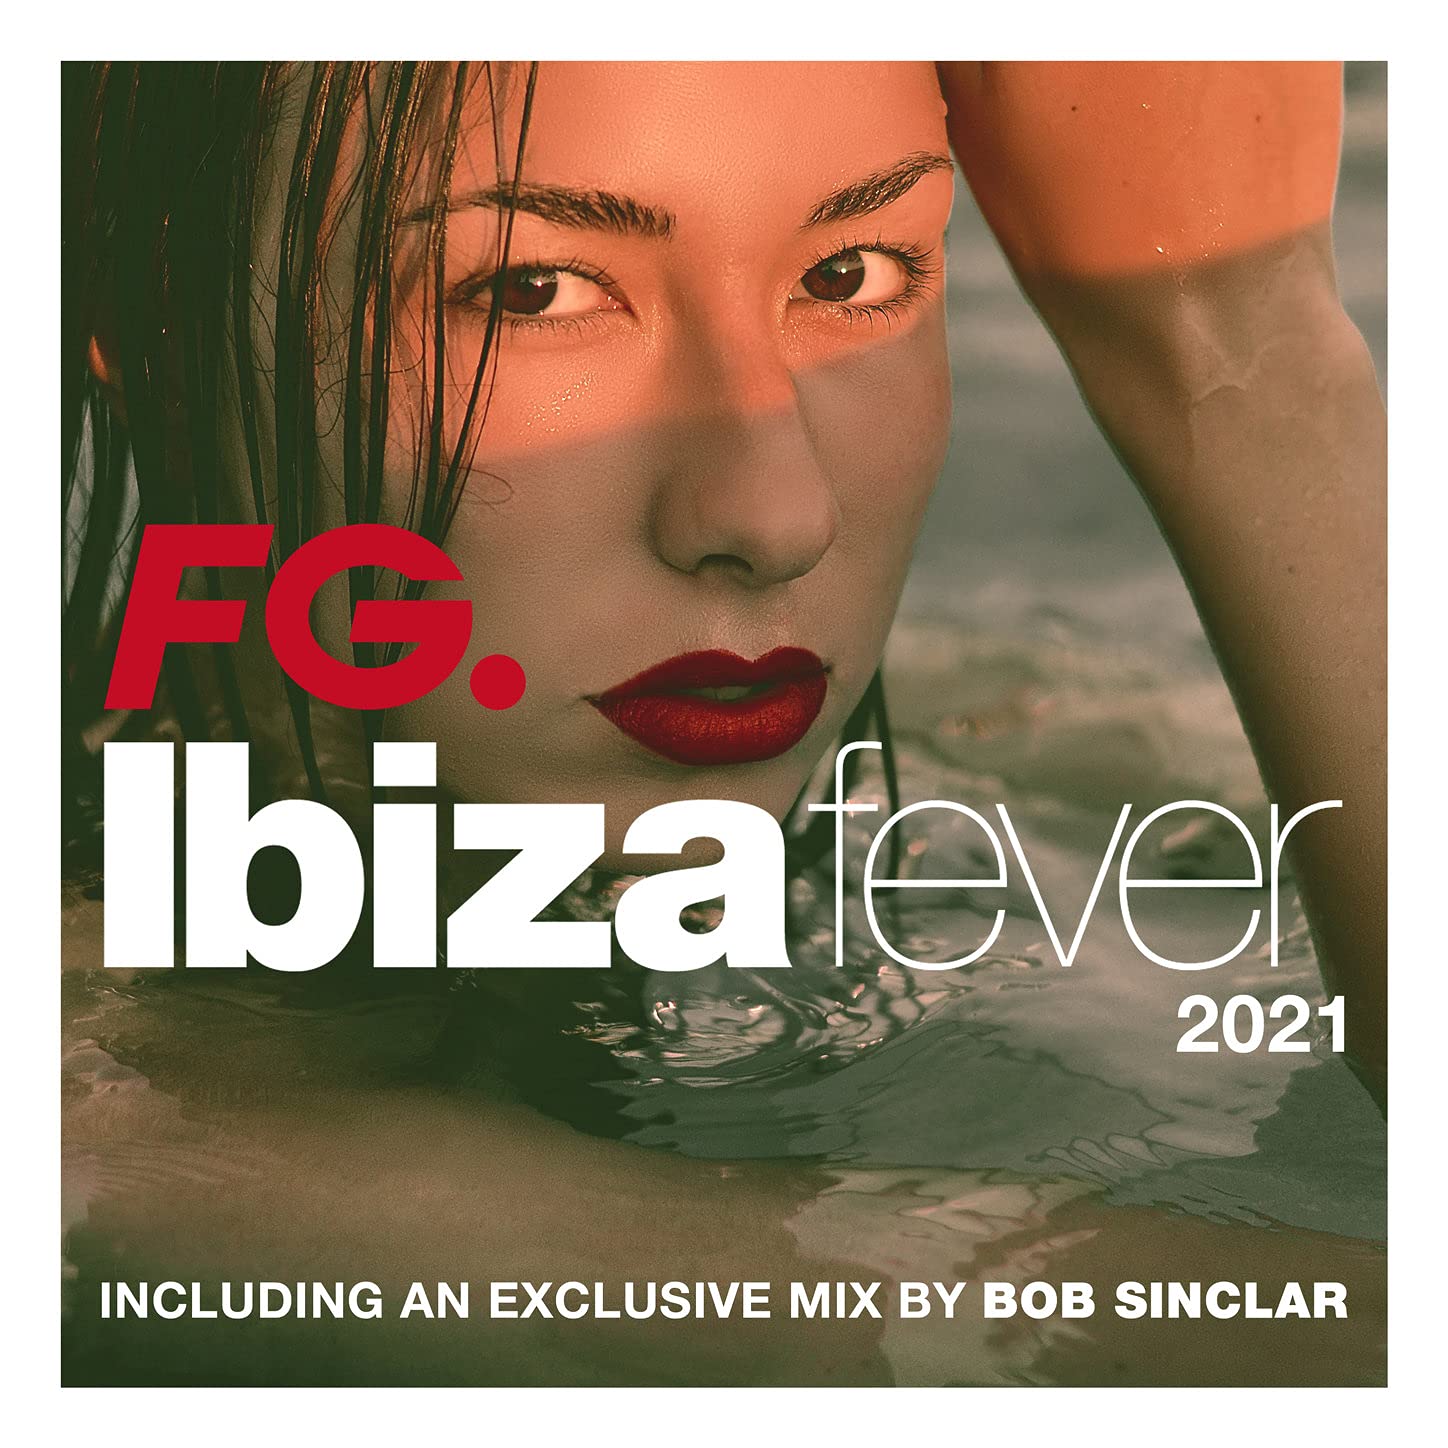 VA – FG. Ibiza Fever 2021 (2021) [FLAC]